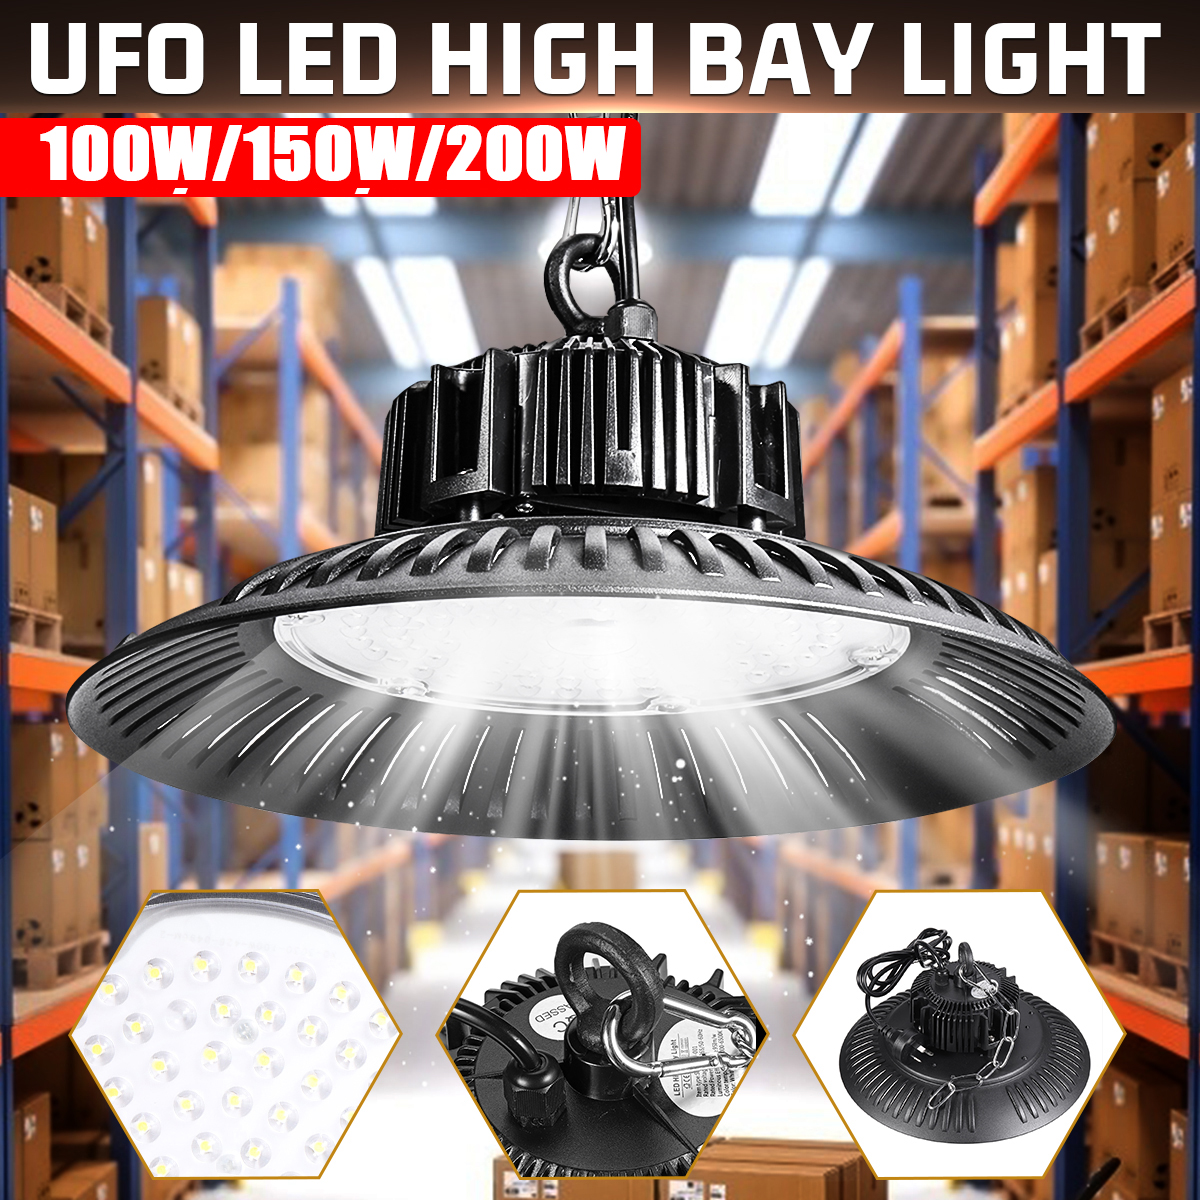 100150200W-UFO-LED-High-Bay-Light-Workshop-Lighting-Engineering-Industry-Lamp-1755179-2